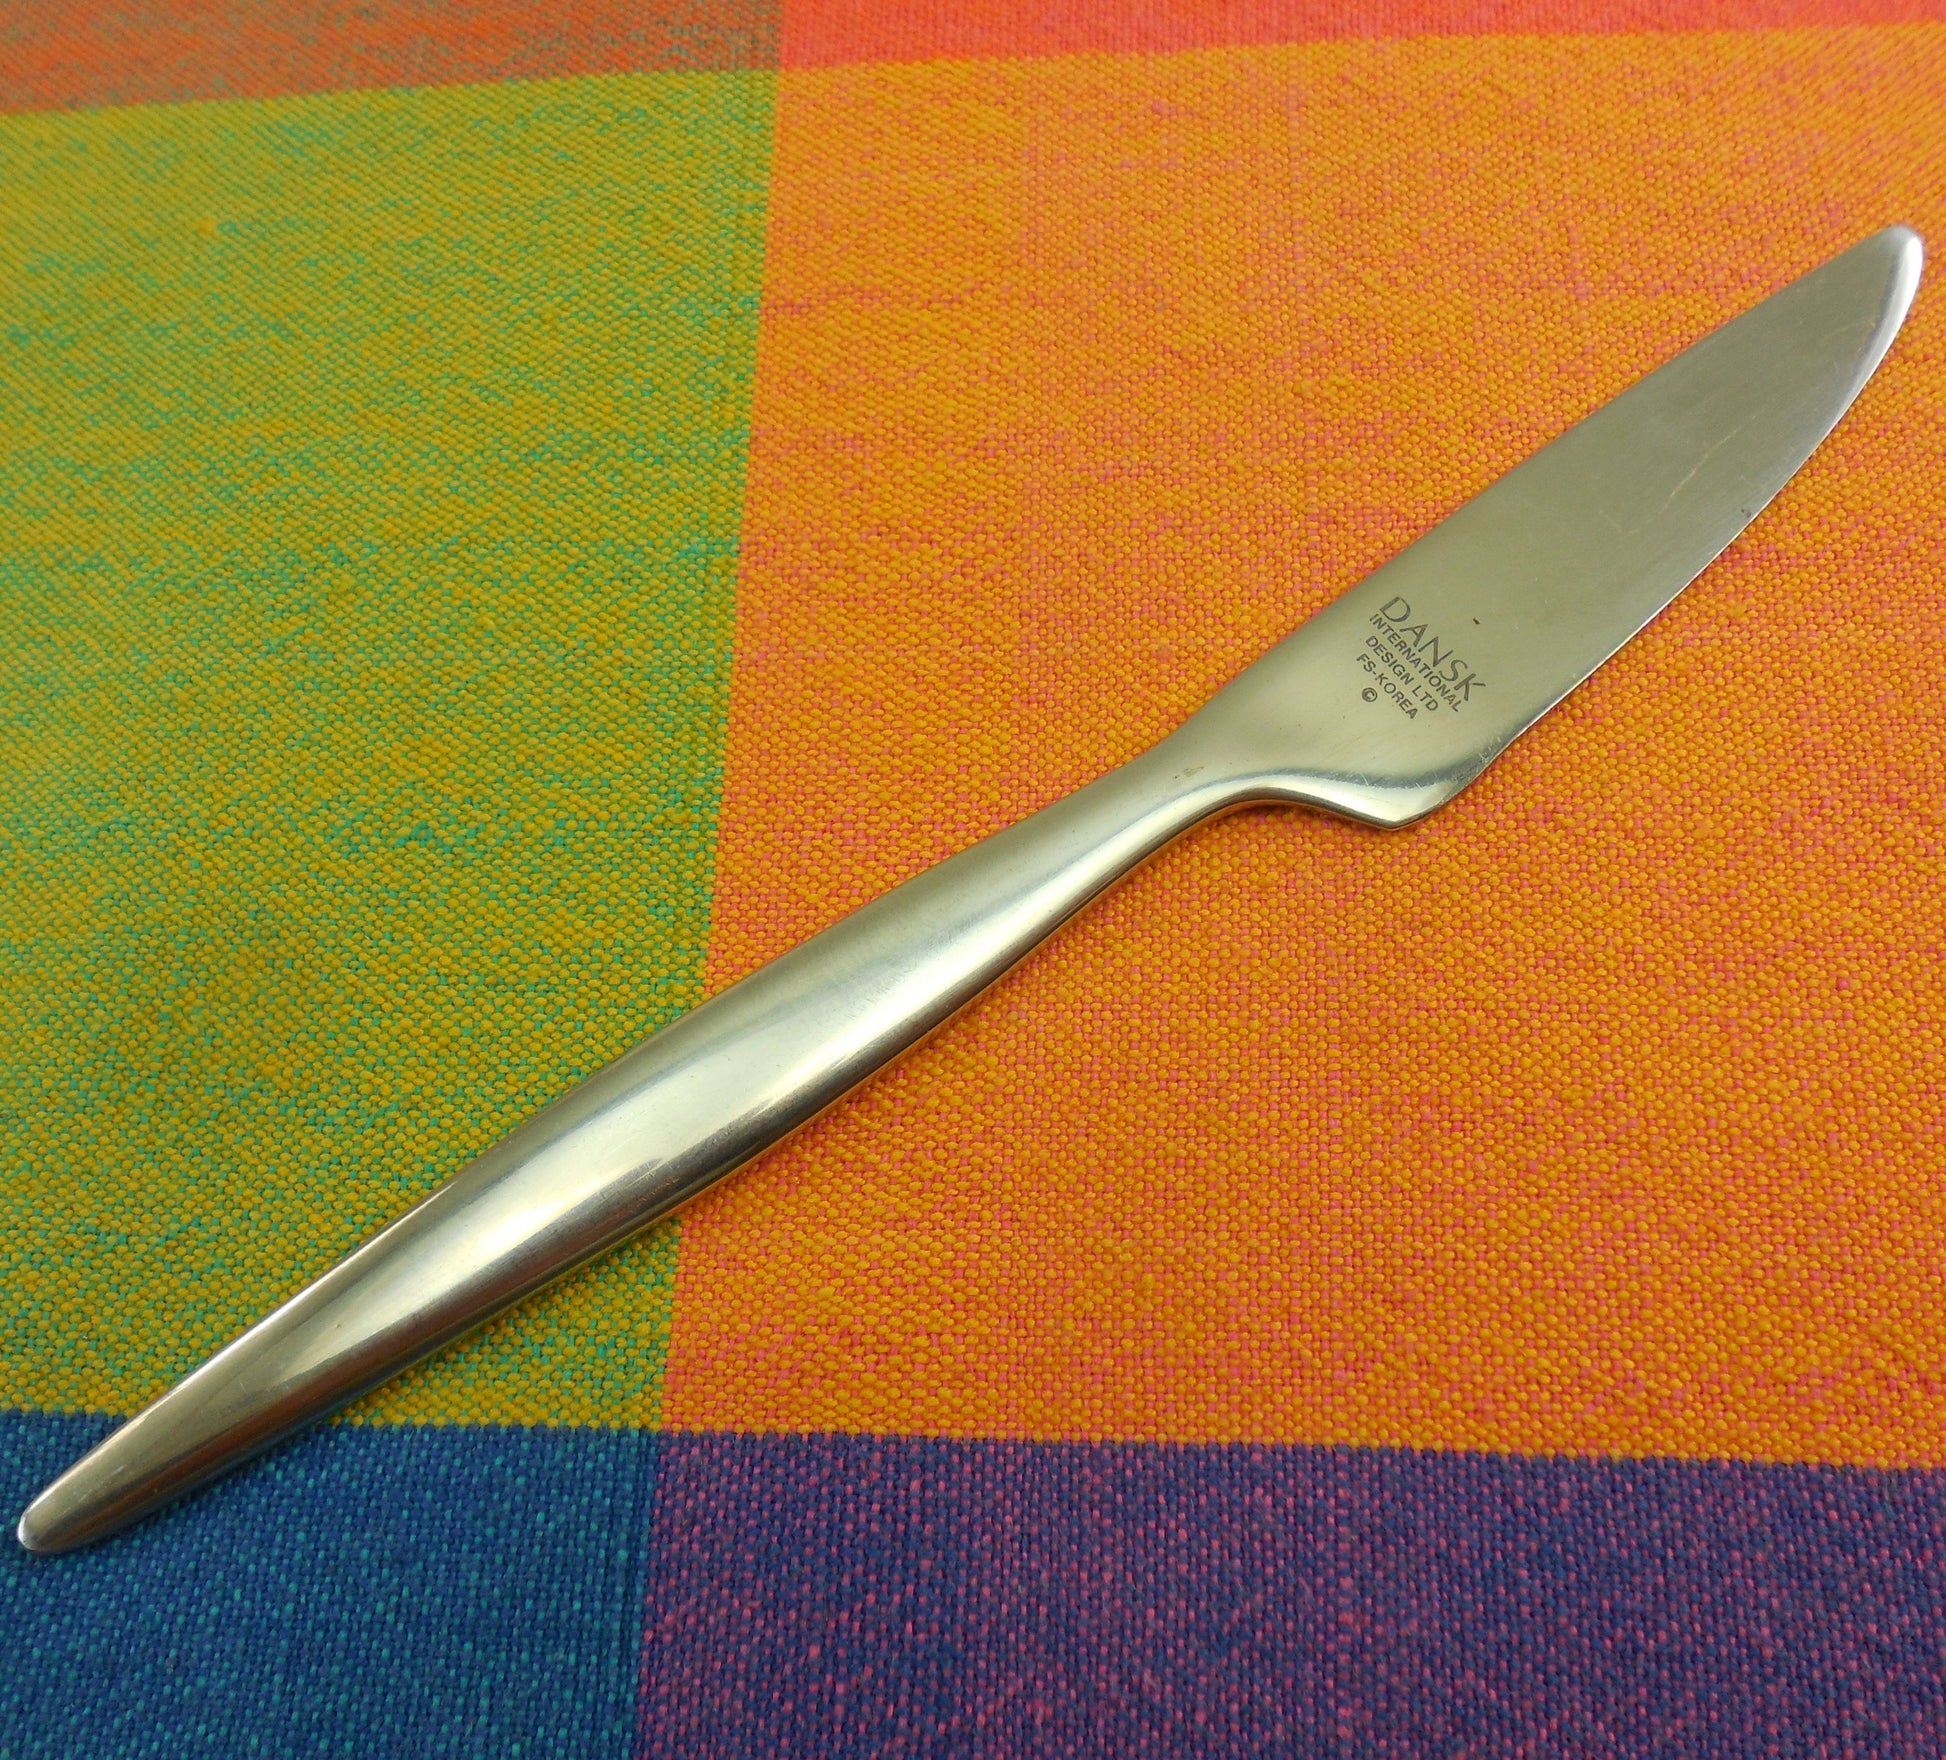 Dansk Thorn Korea Stainless Flatware - Butter Spreader Knife Vintage Used